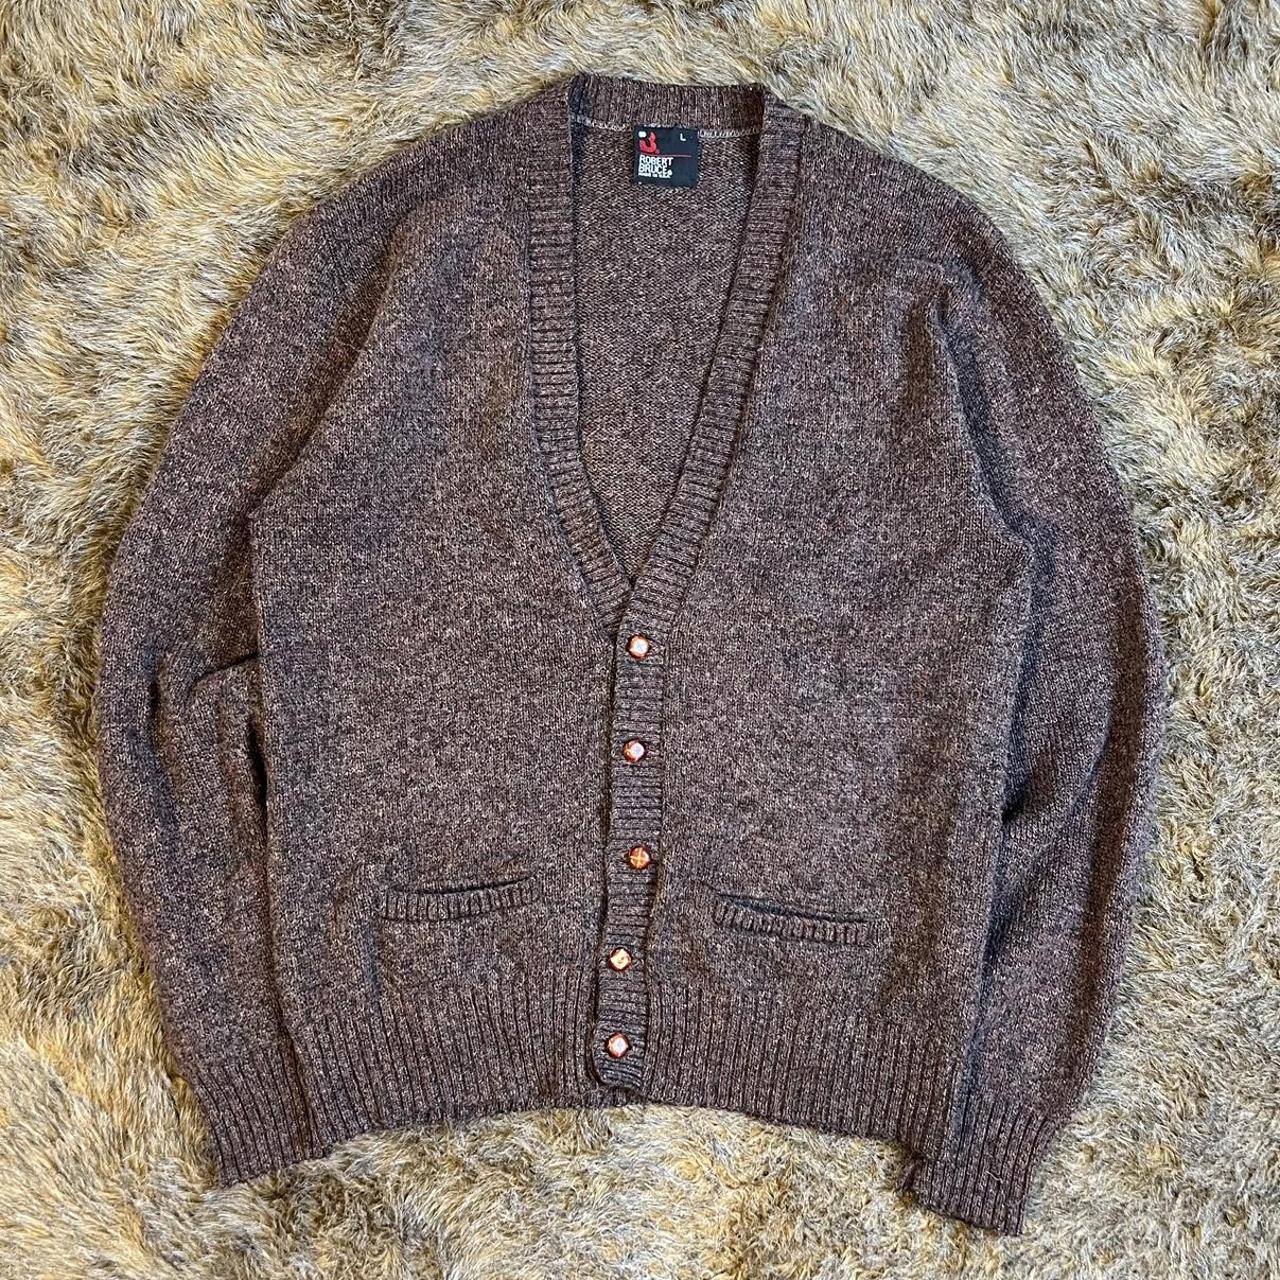 Vintage Robert Bruce cardigan sweater salt and... - Depop